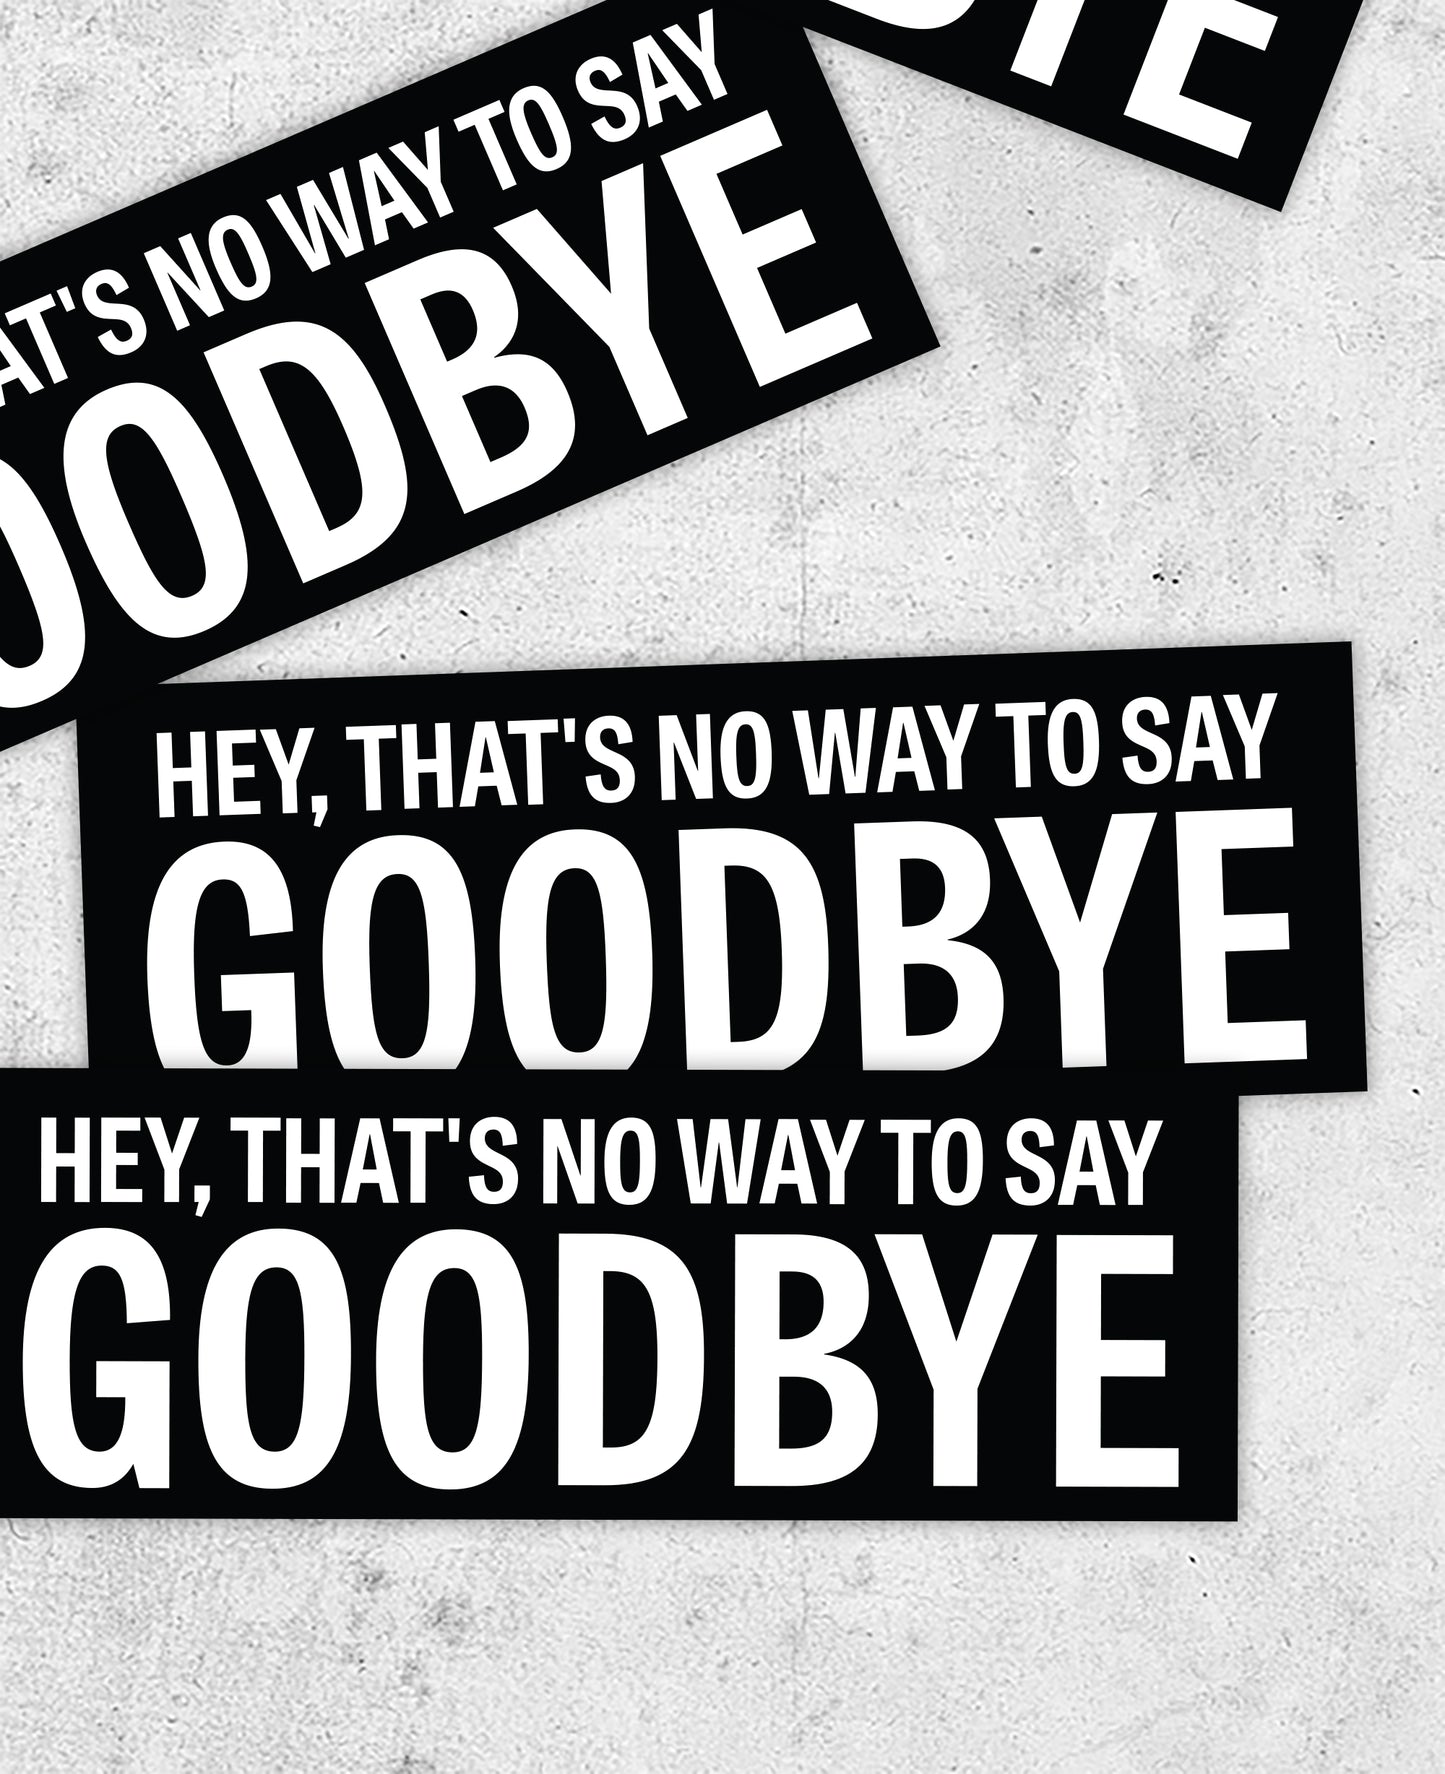 Leonard Cohen "Hey, that's no way to say goodbye" Sticker